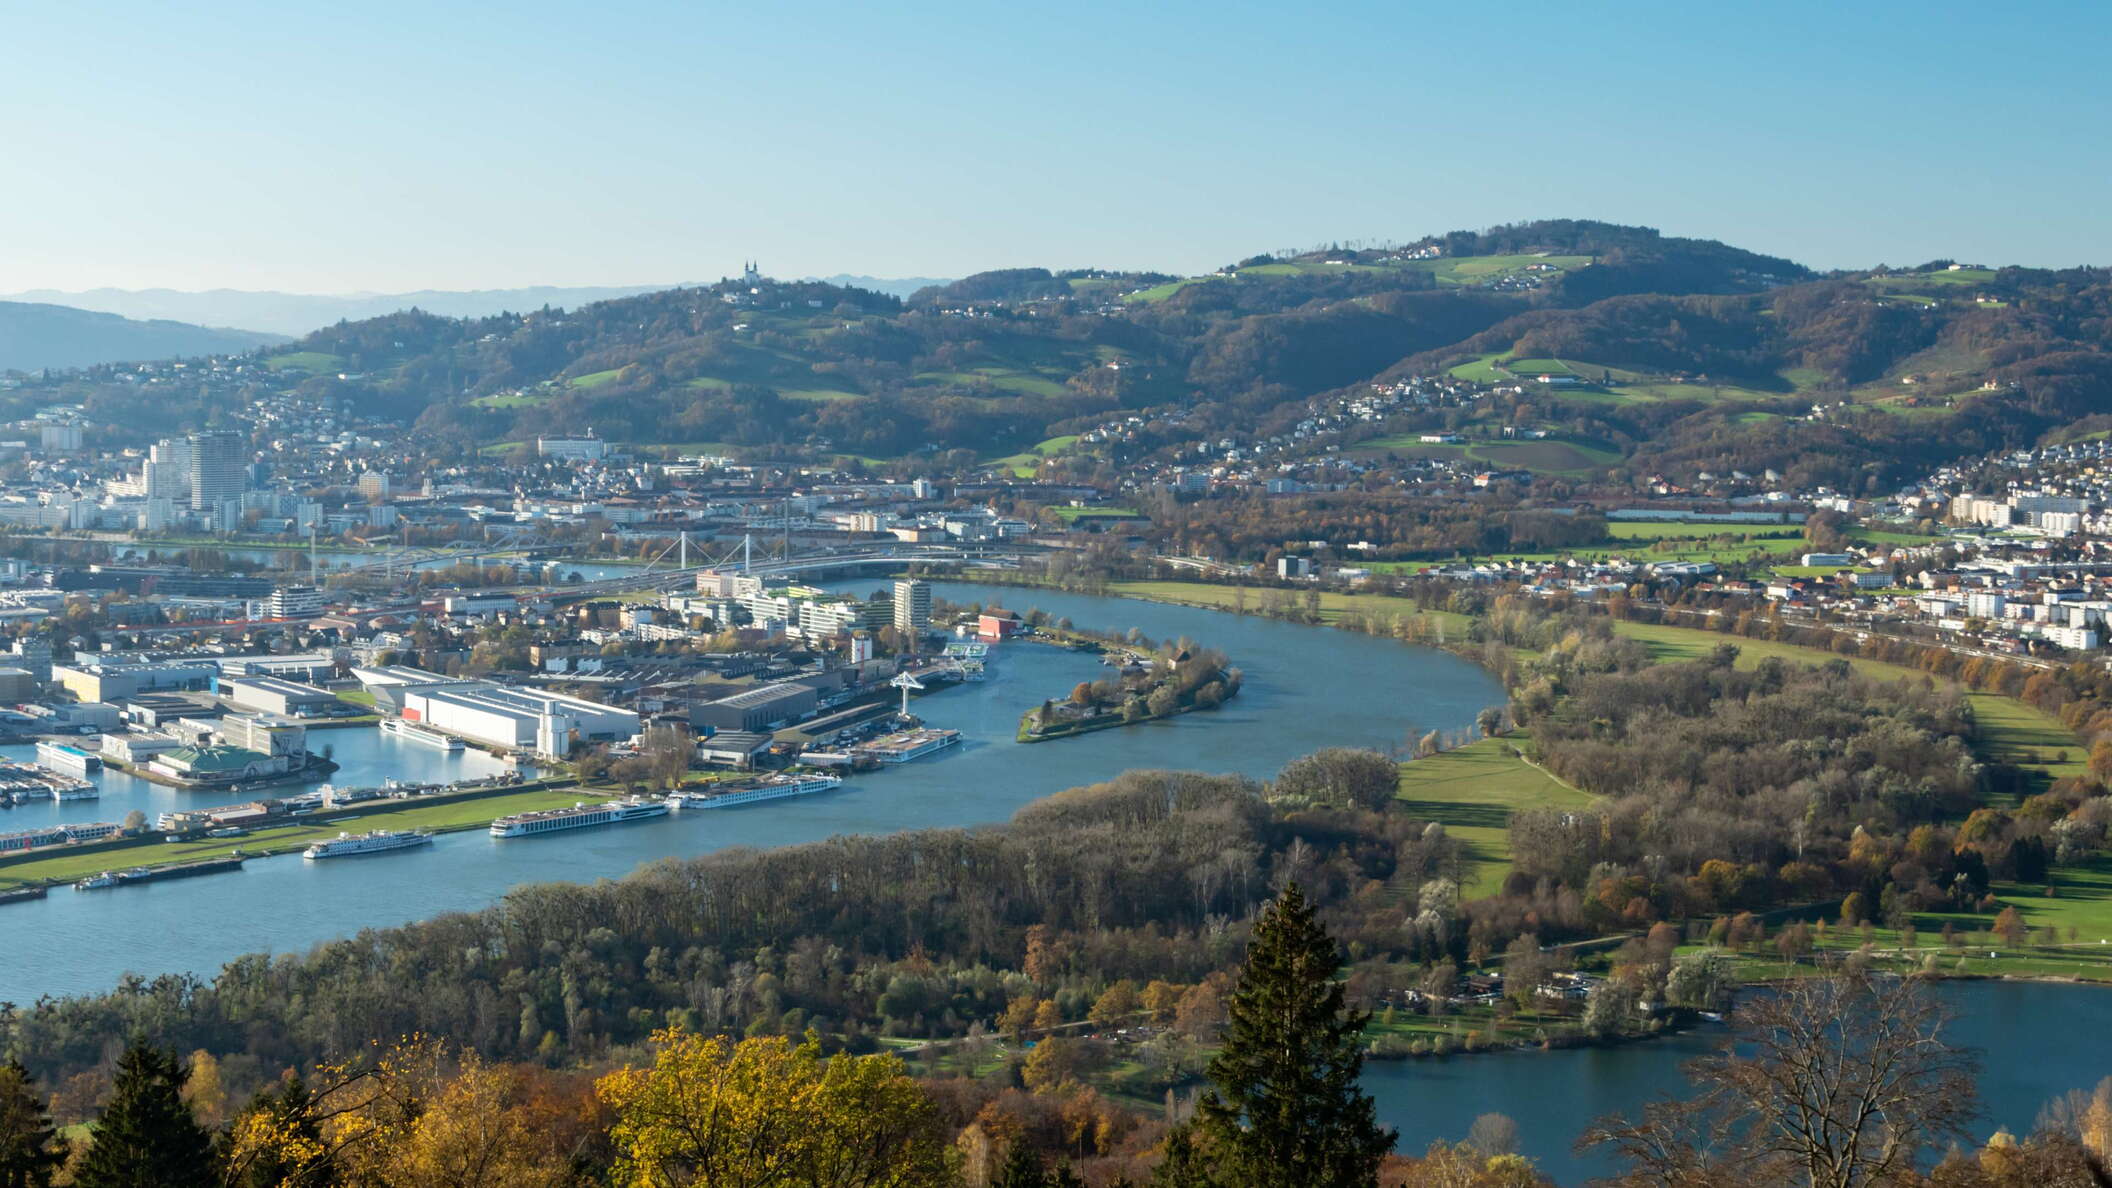 Linz | Danube with Urfahr and Pöstlingberg